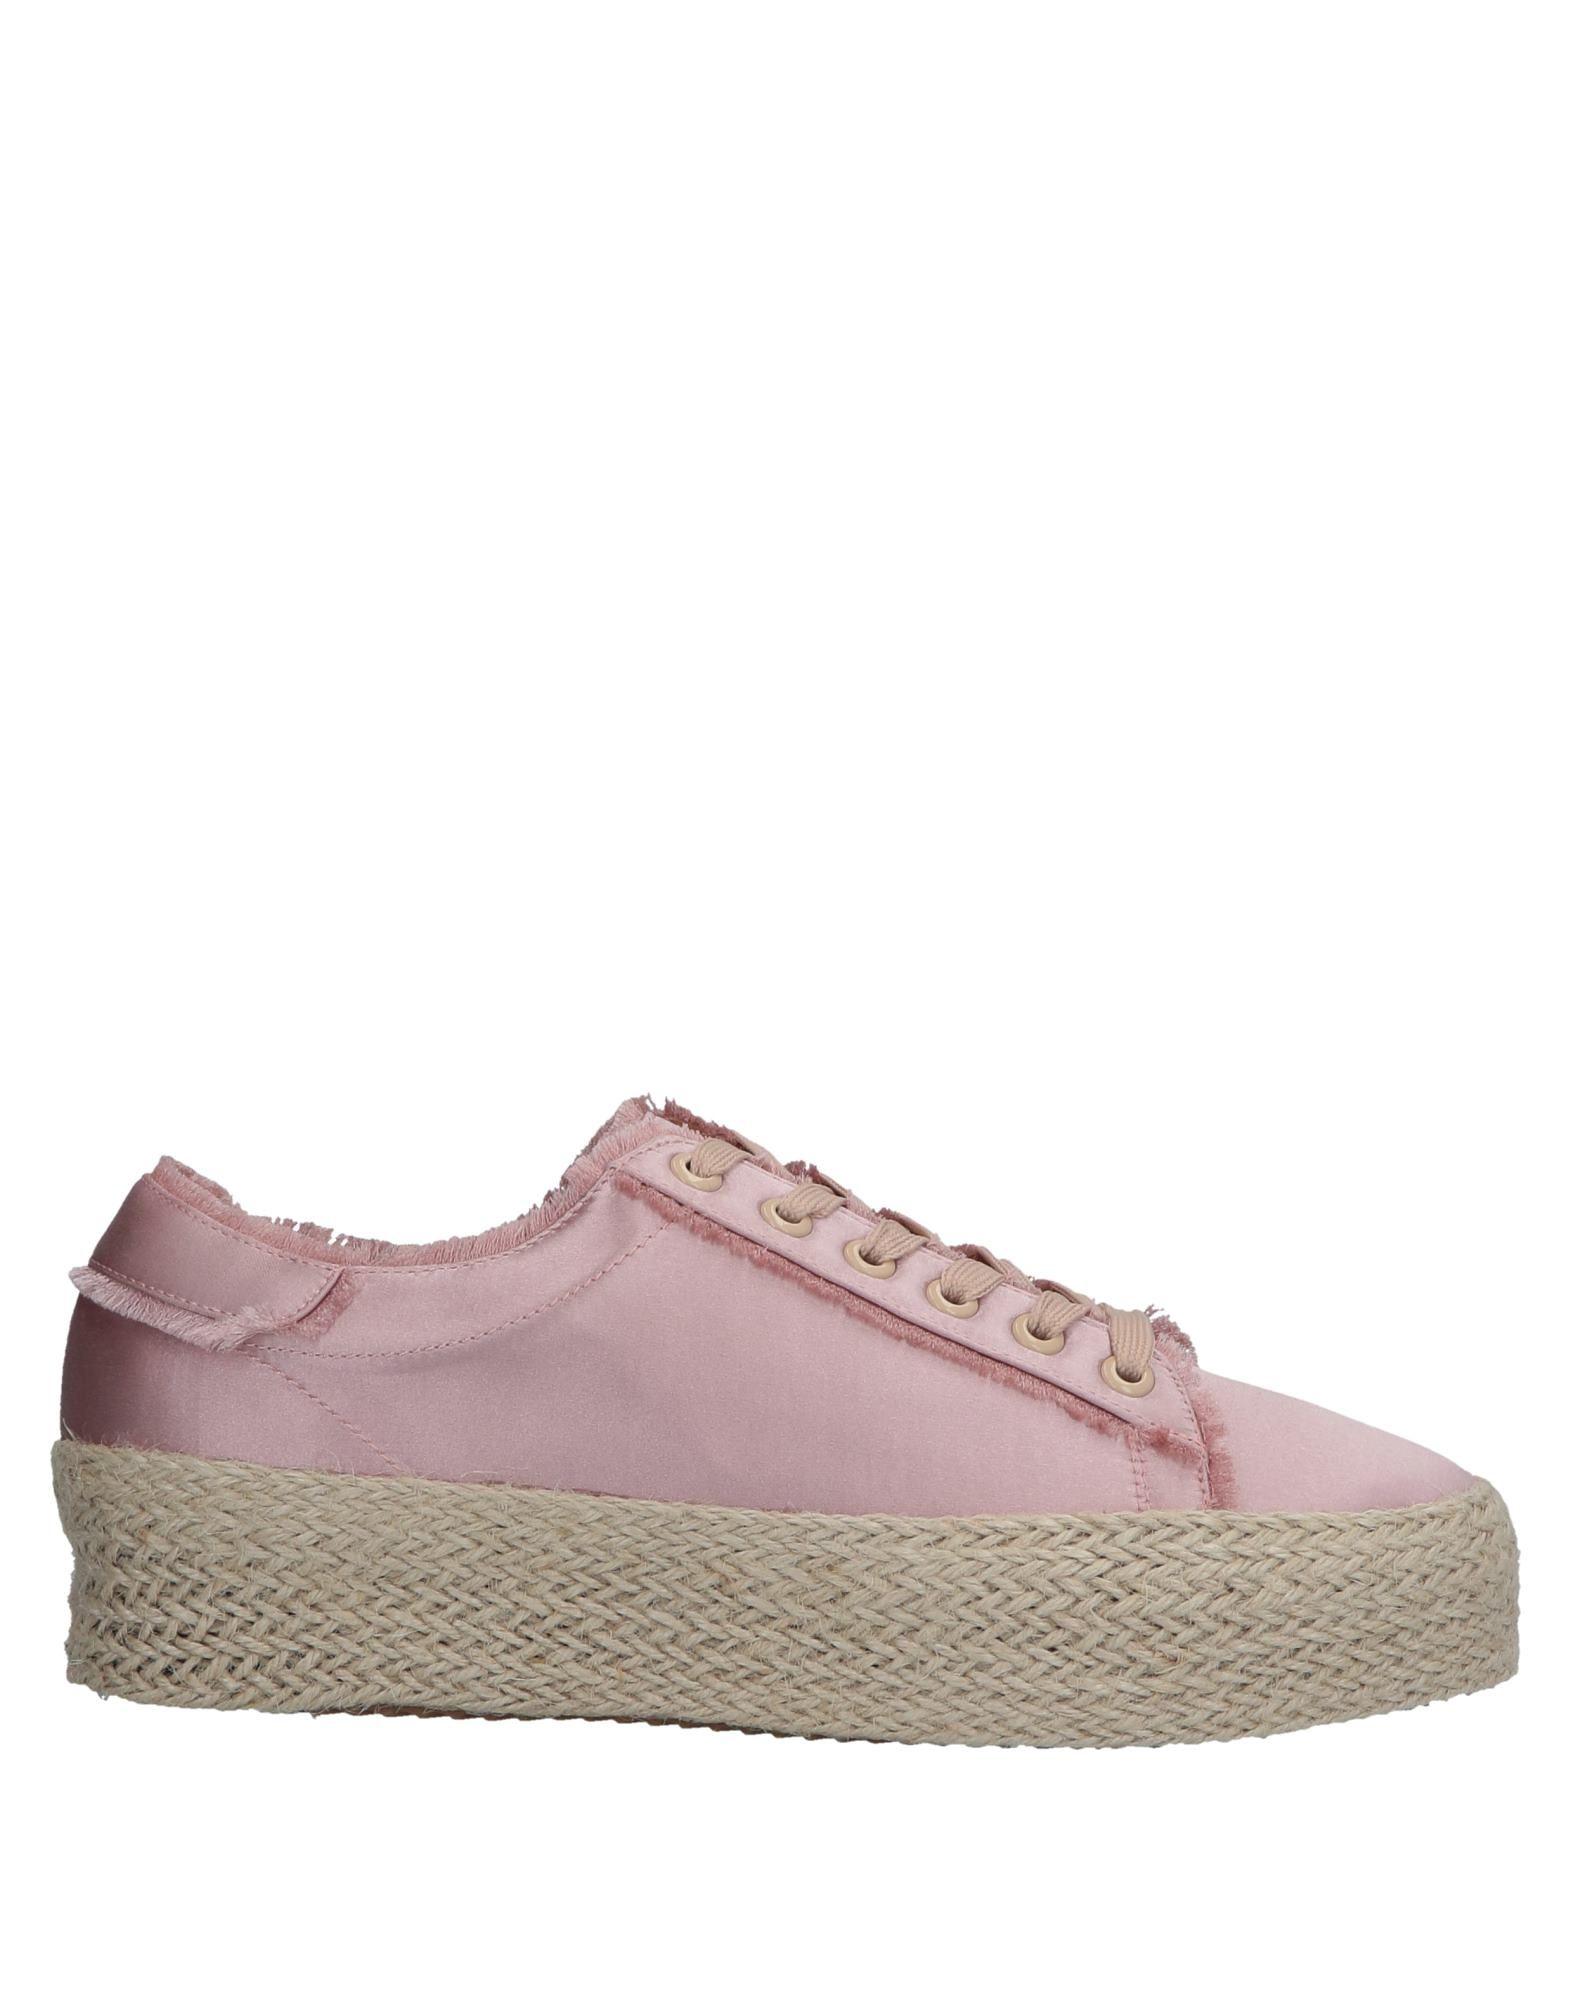 Bibi Lou Satin Low-tops & Sneakers in Pastel Pink (Pink) - Lyst